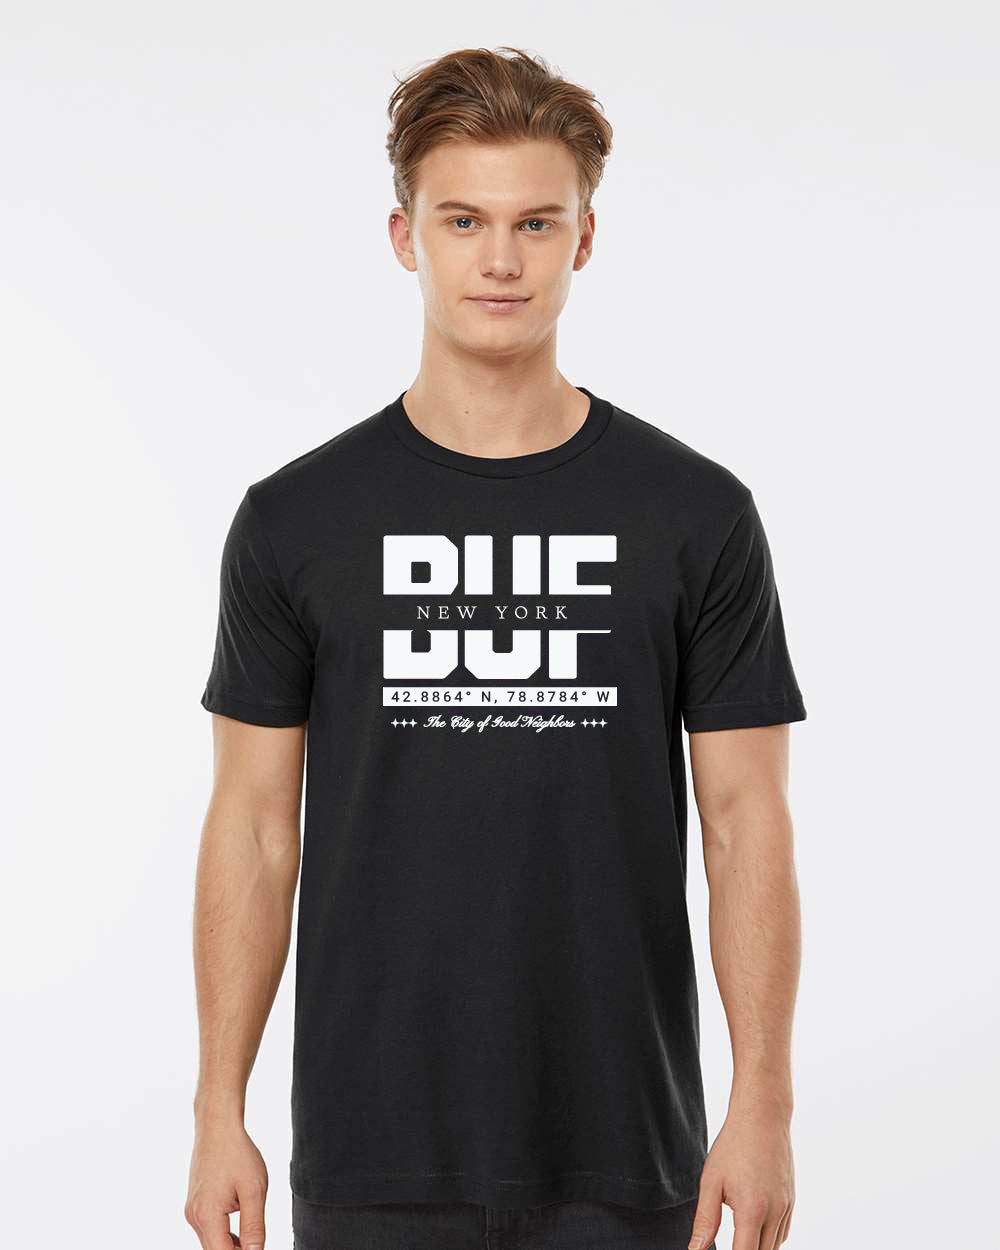 Buffalo New York, BUF coordinates T Shirt